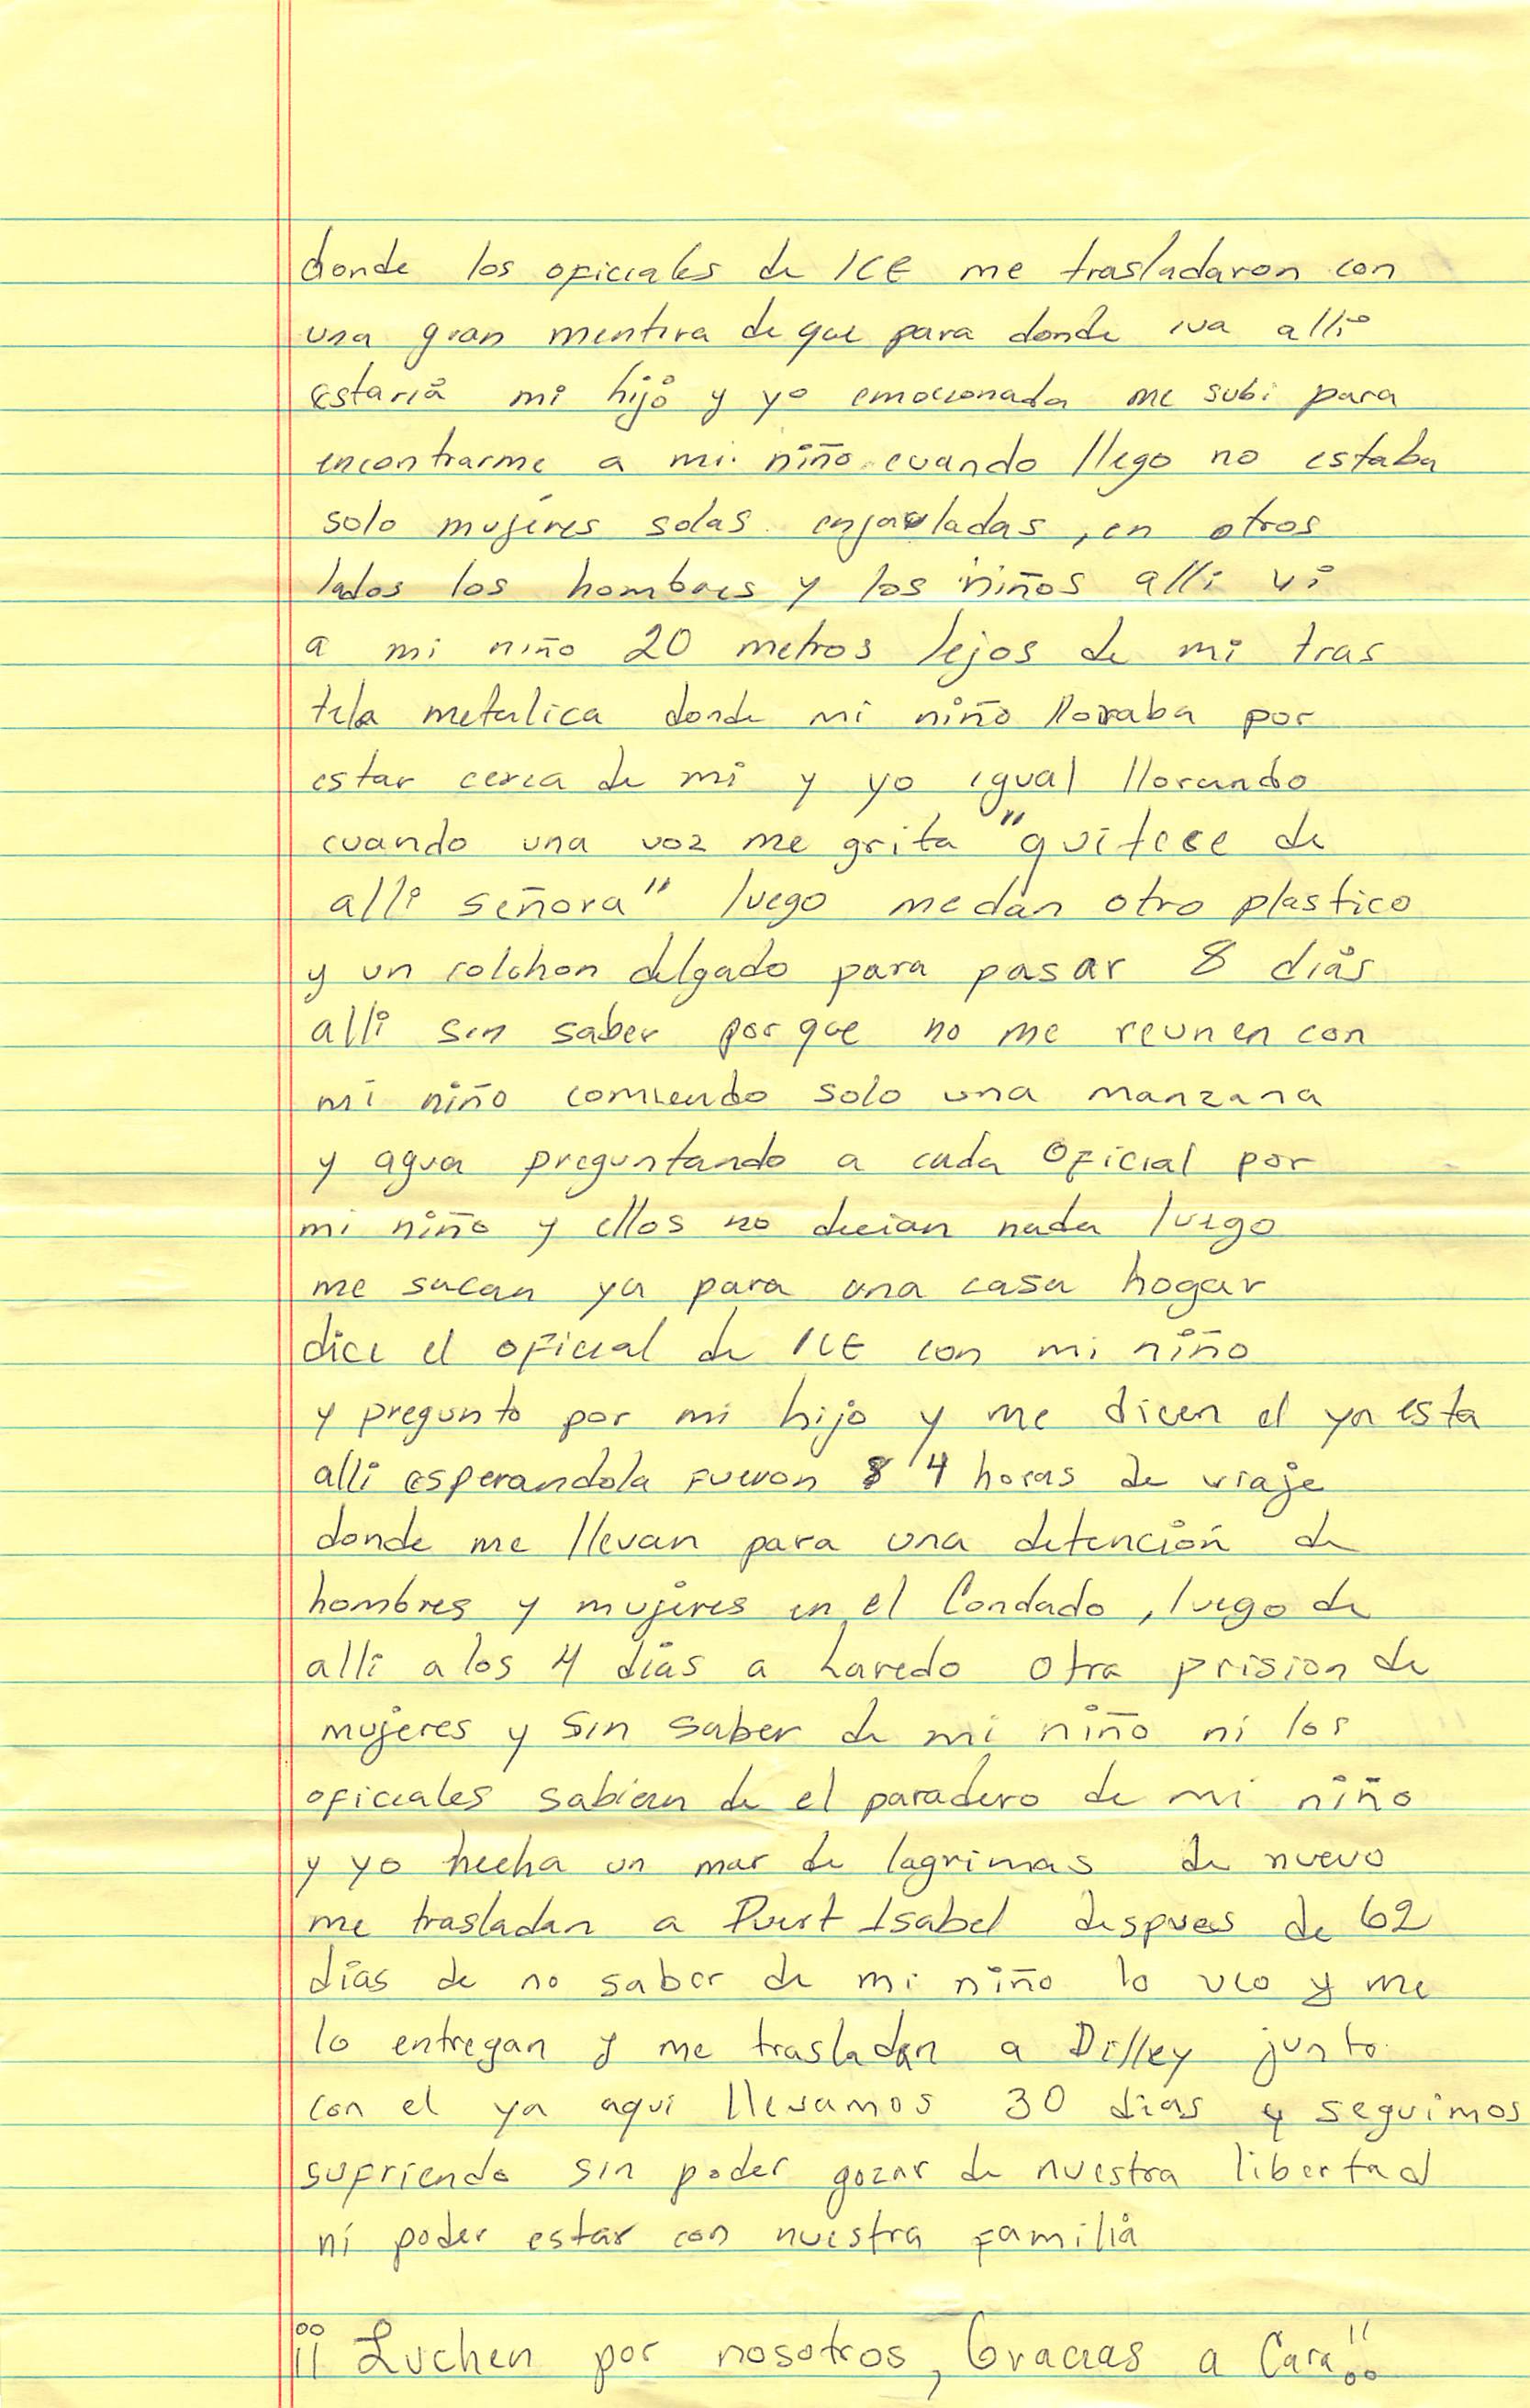 Luna's Handwritten Letter Part 2